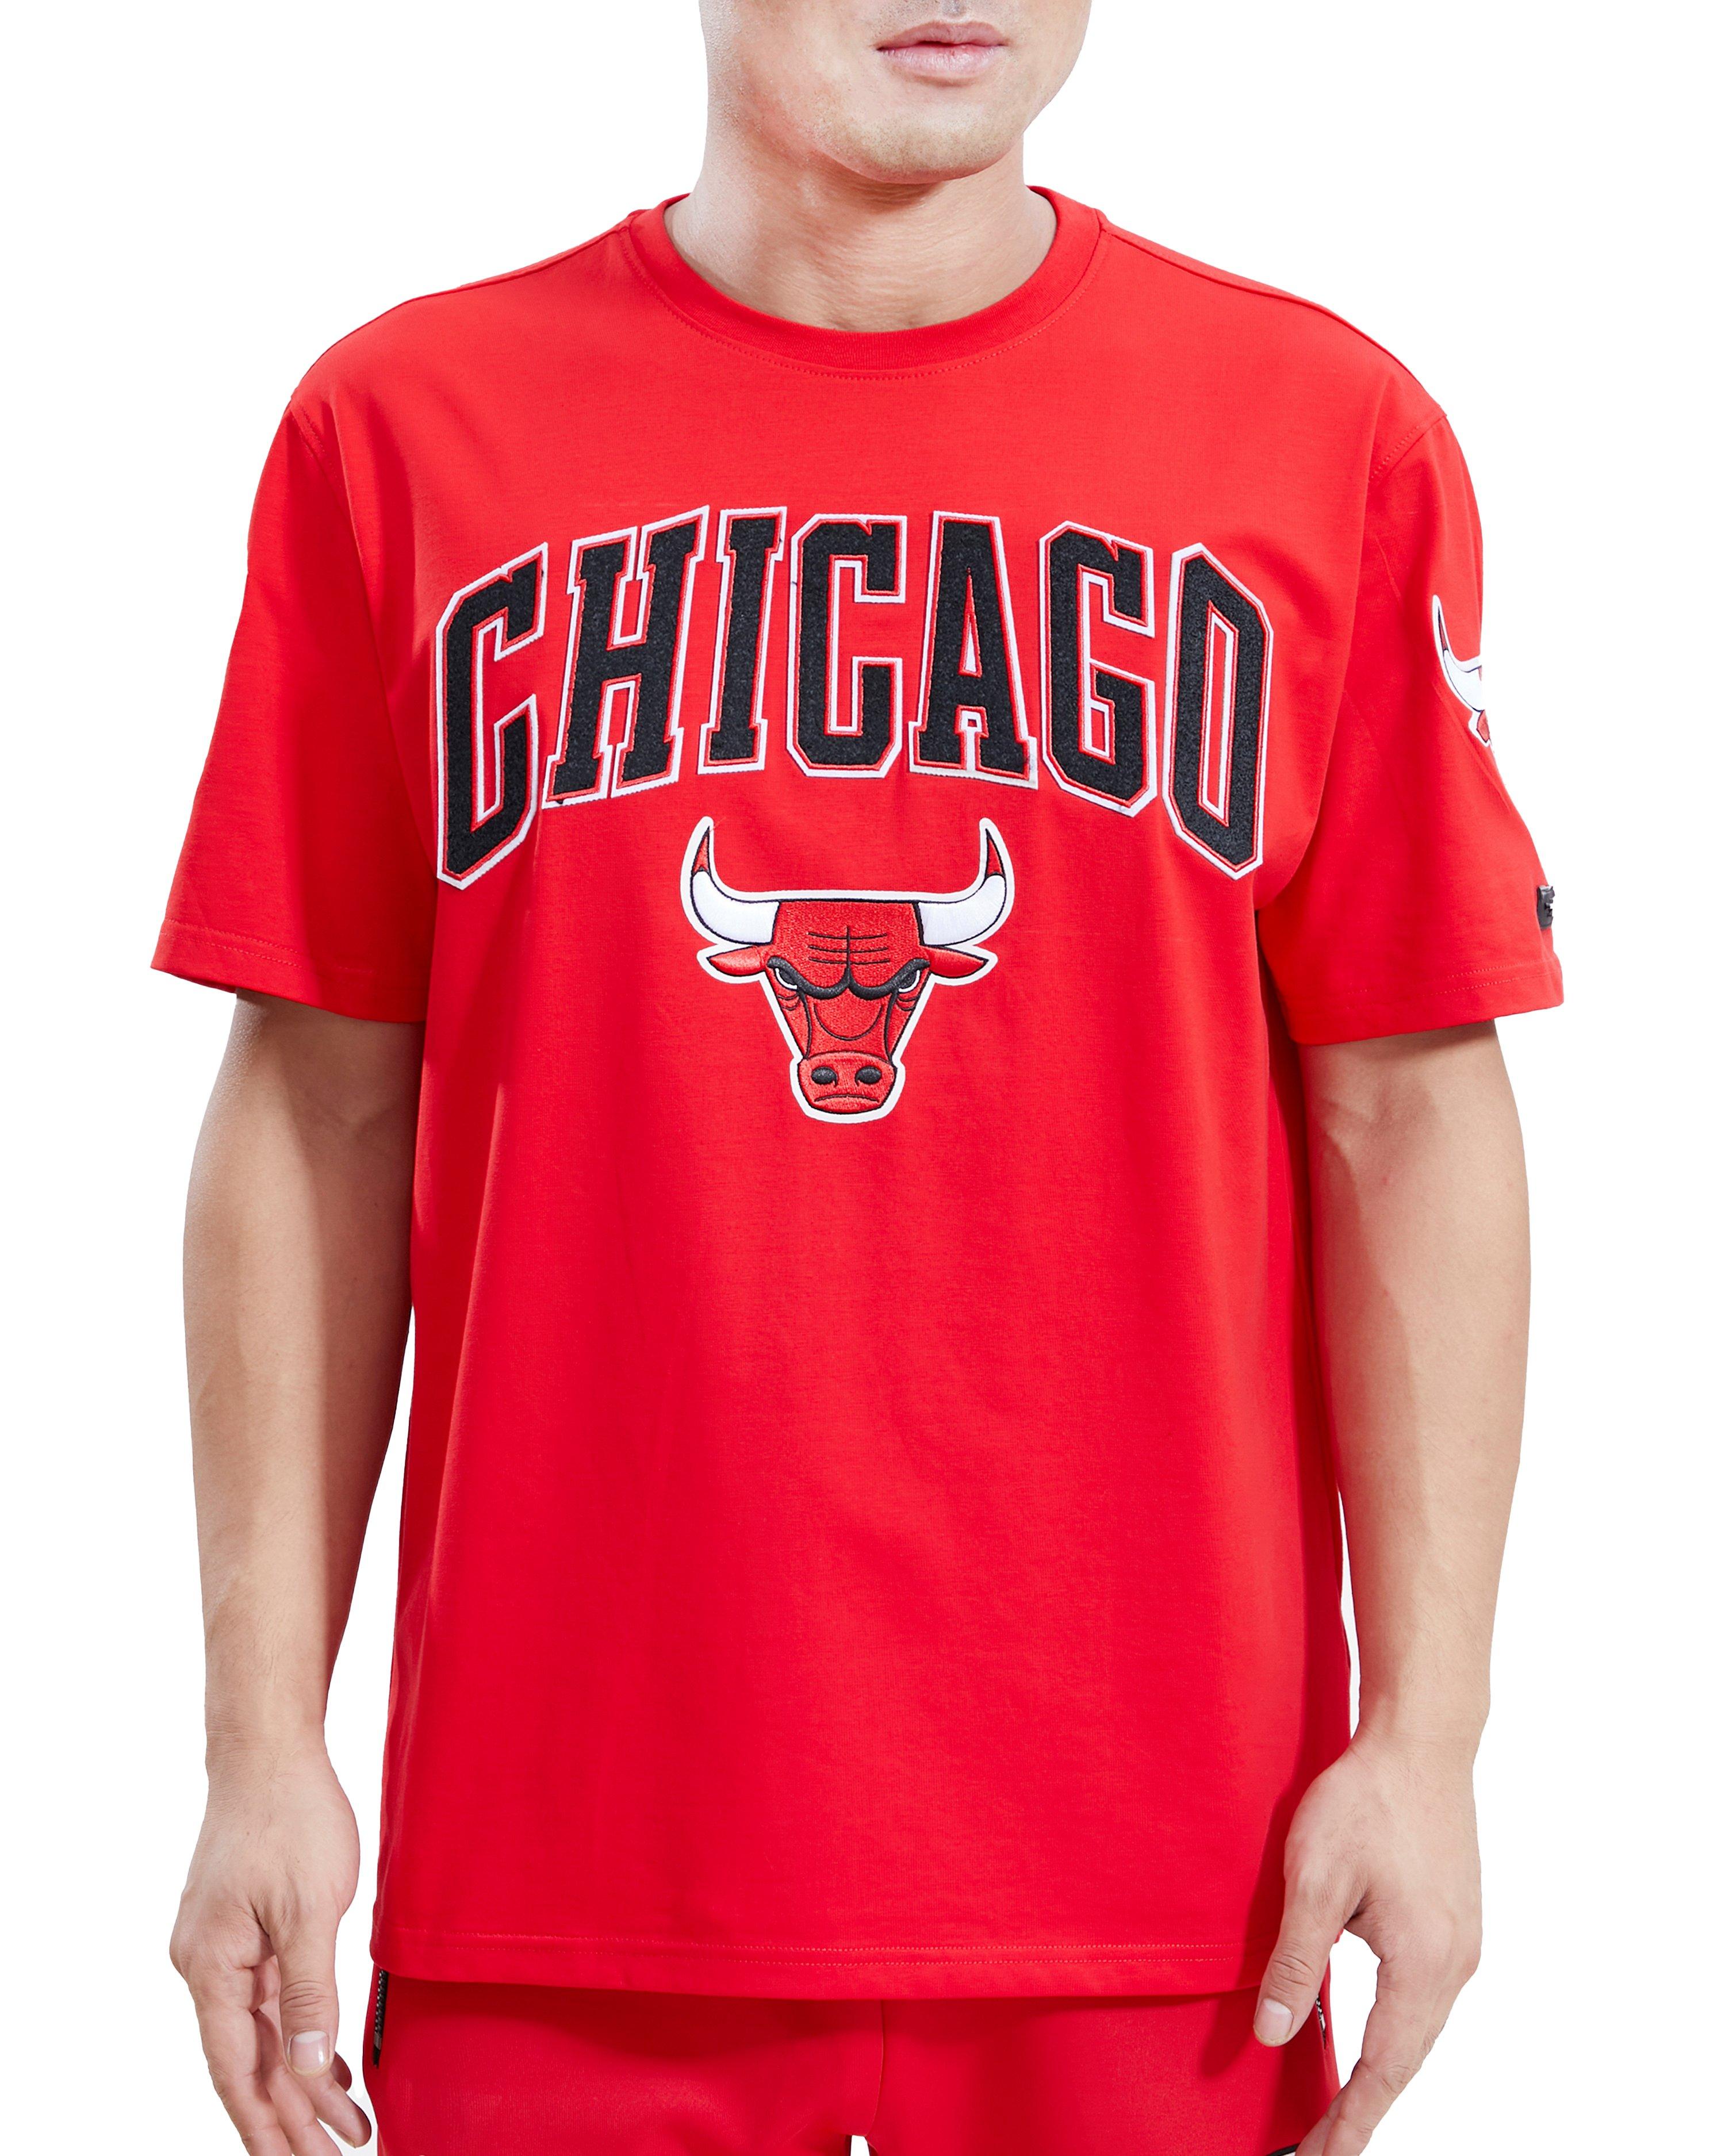 Pro Standard NBA Chicago Bulls Pro Team Black/Red Men's Shirt BCB15139-BLK - M